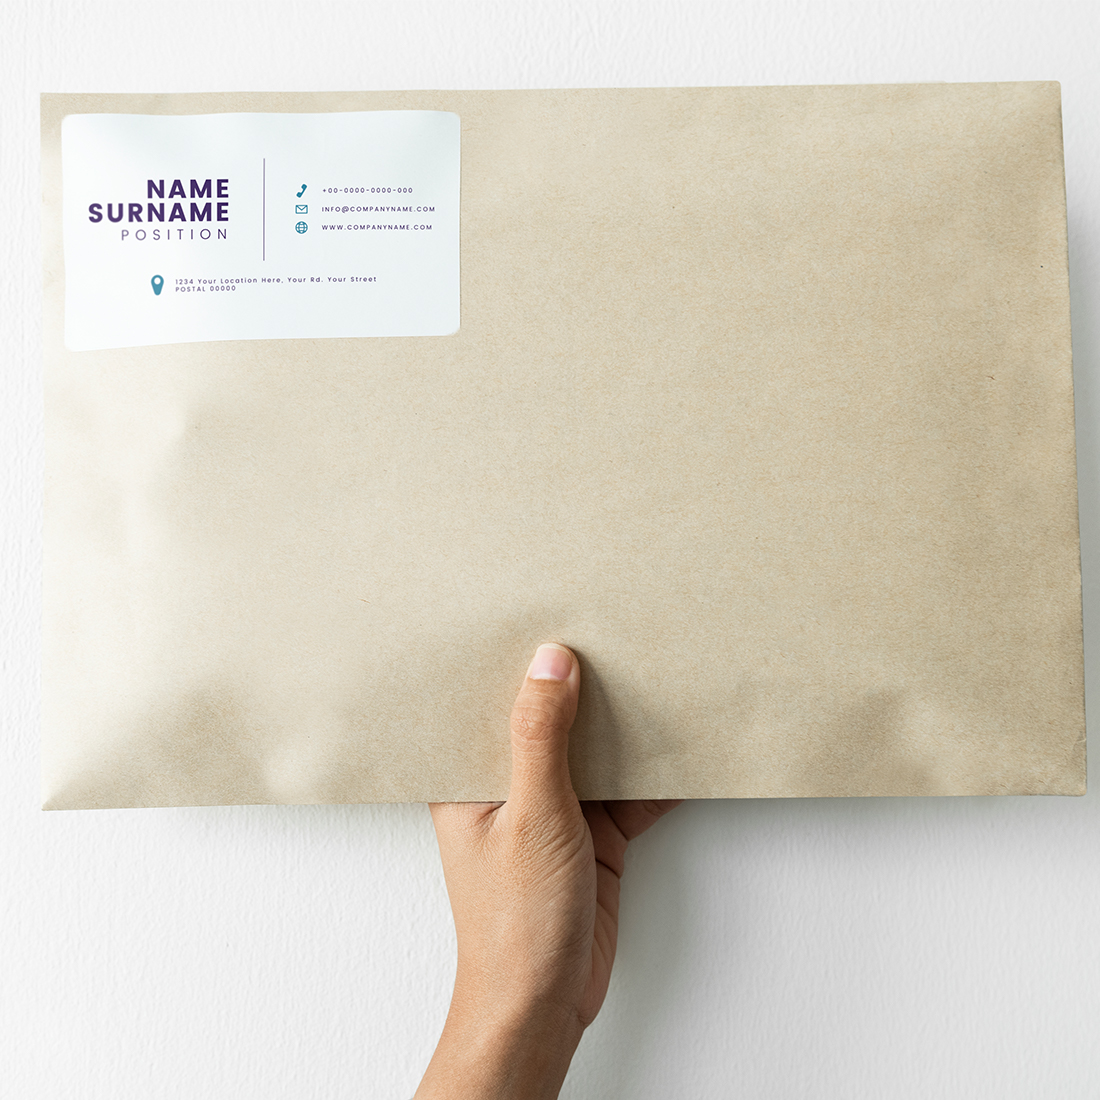 MR-Label White Parcel Shipping Labels – for Packages, Parcels